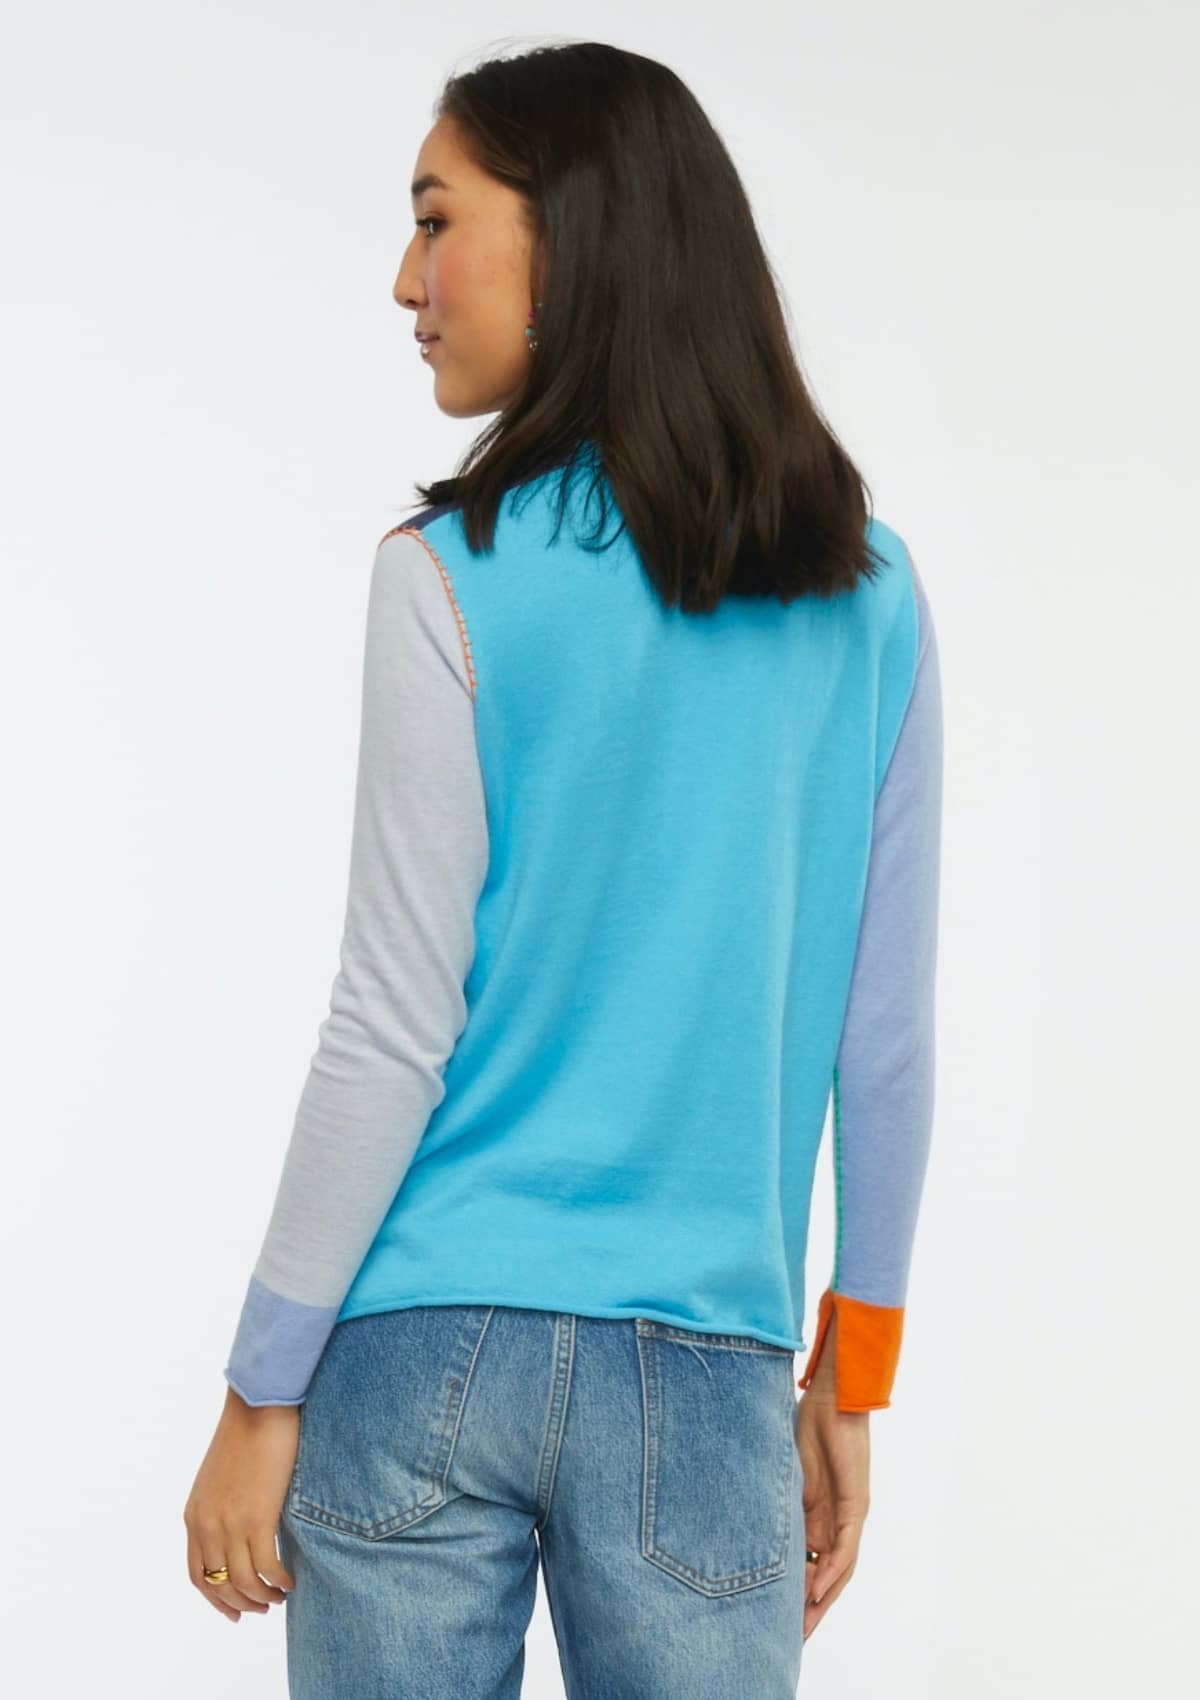 Color Block Sweater -Plekta Inc./ Zaket & Plover- Ruby Jane-